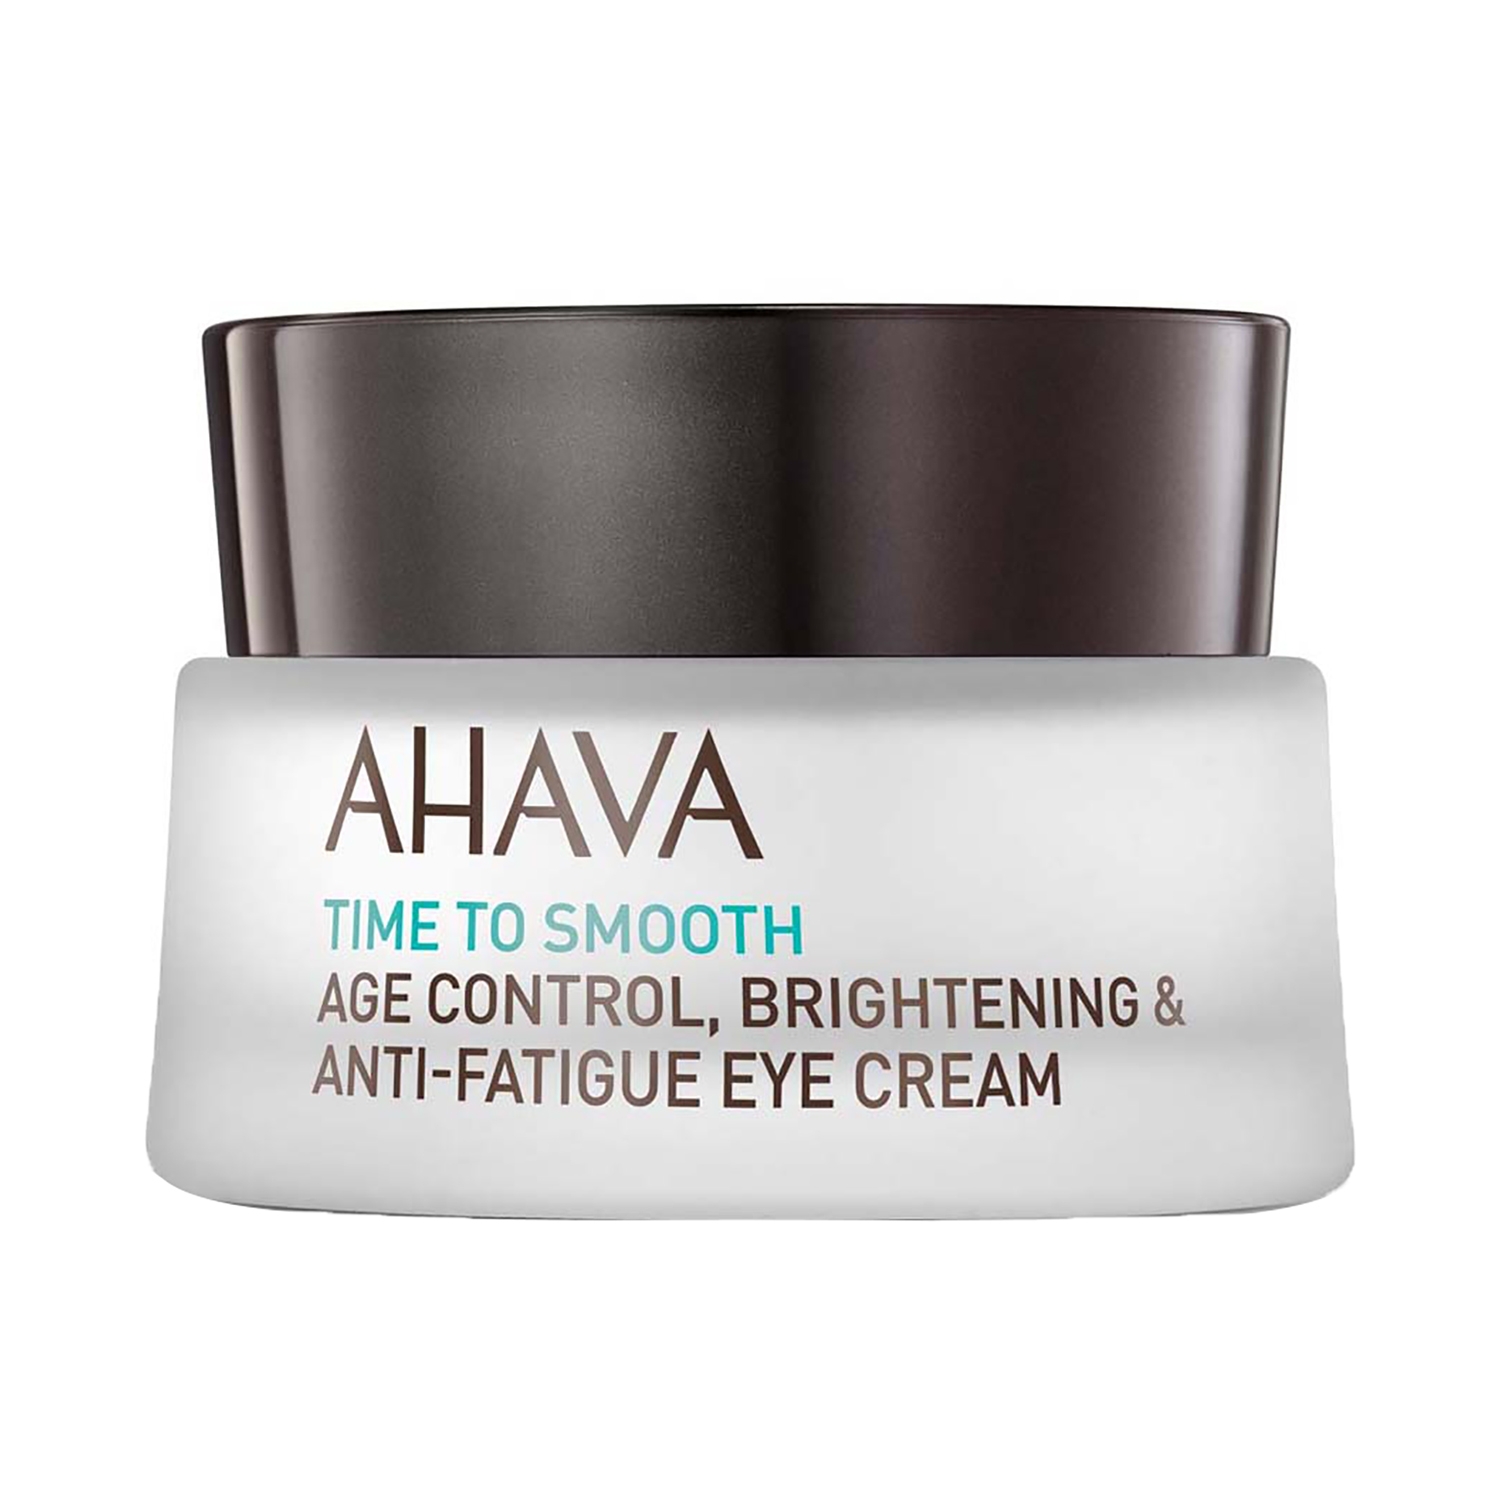 Shop Products Beauty Makeup, Hair Skin, & | Tira: Ahava Online